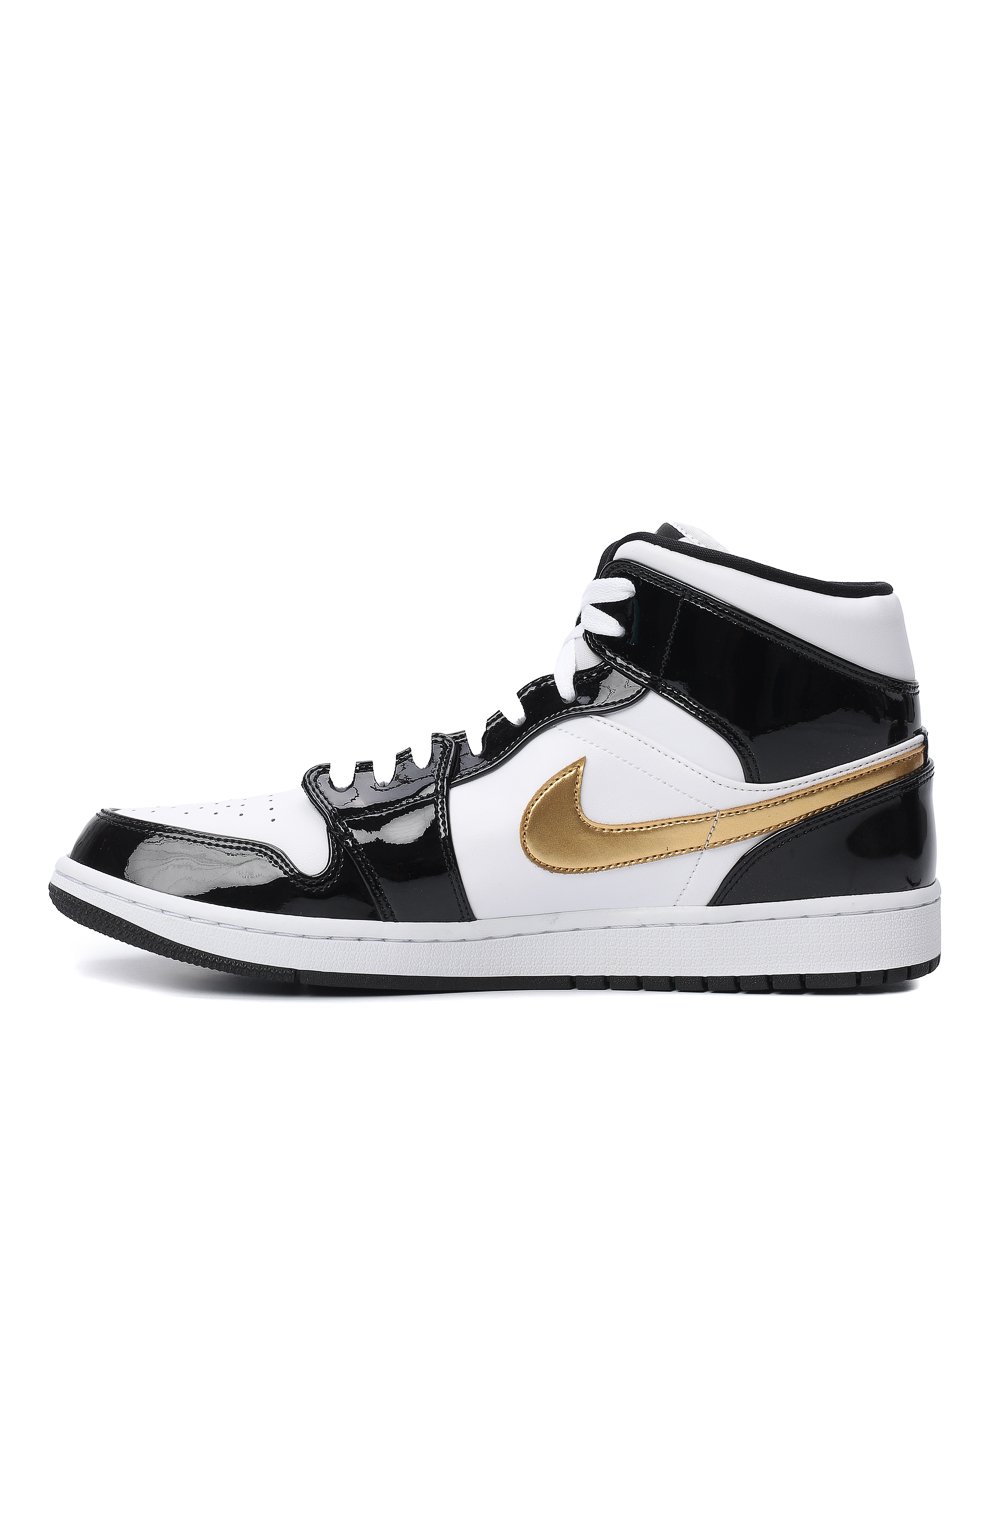 Кеды Air Jordan 1 Mid Patent Black White Gold | Nike | Чёрно-белый - 6